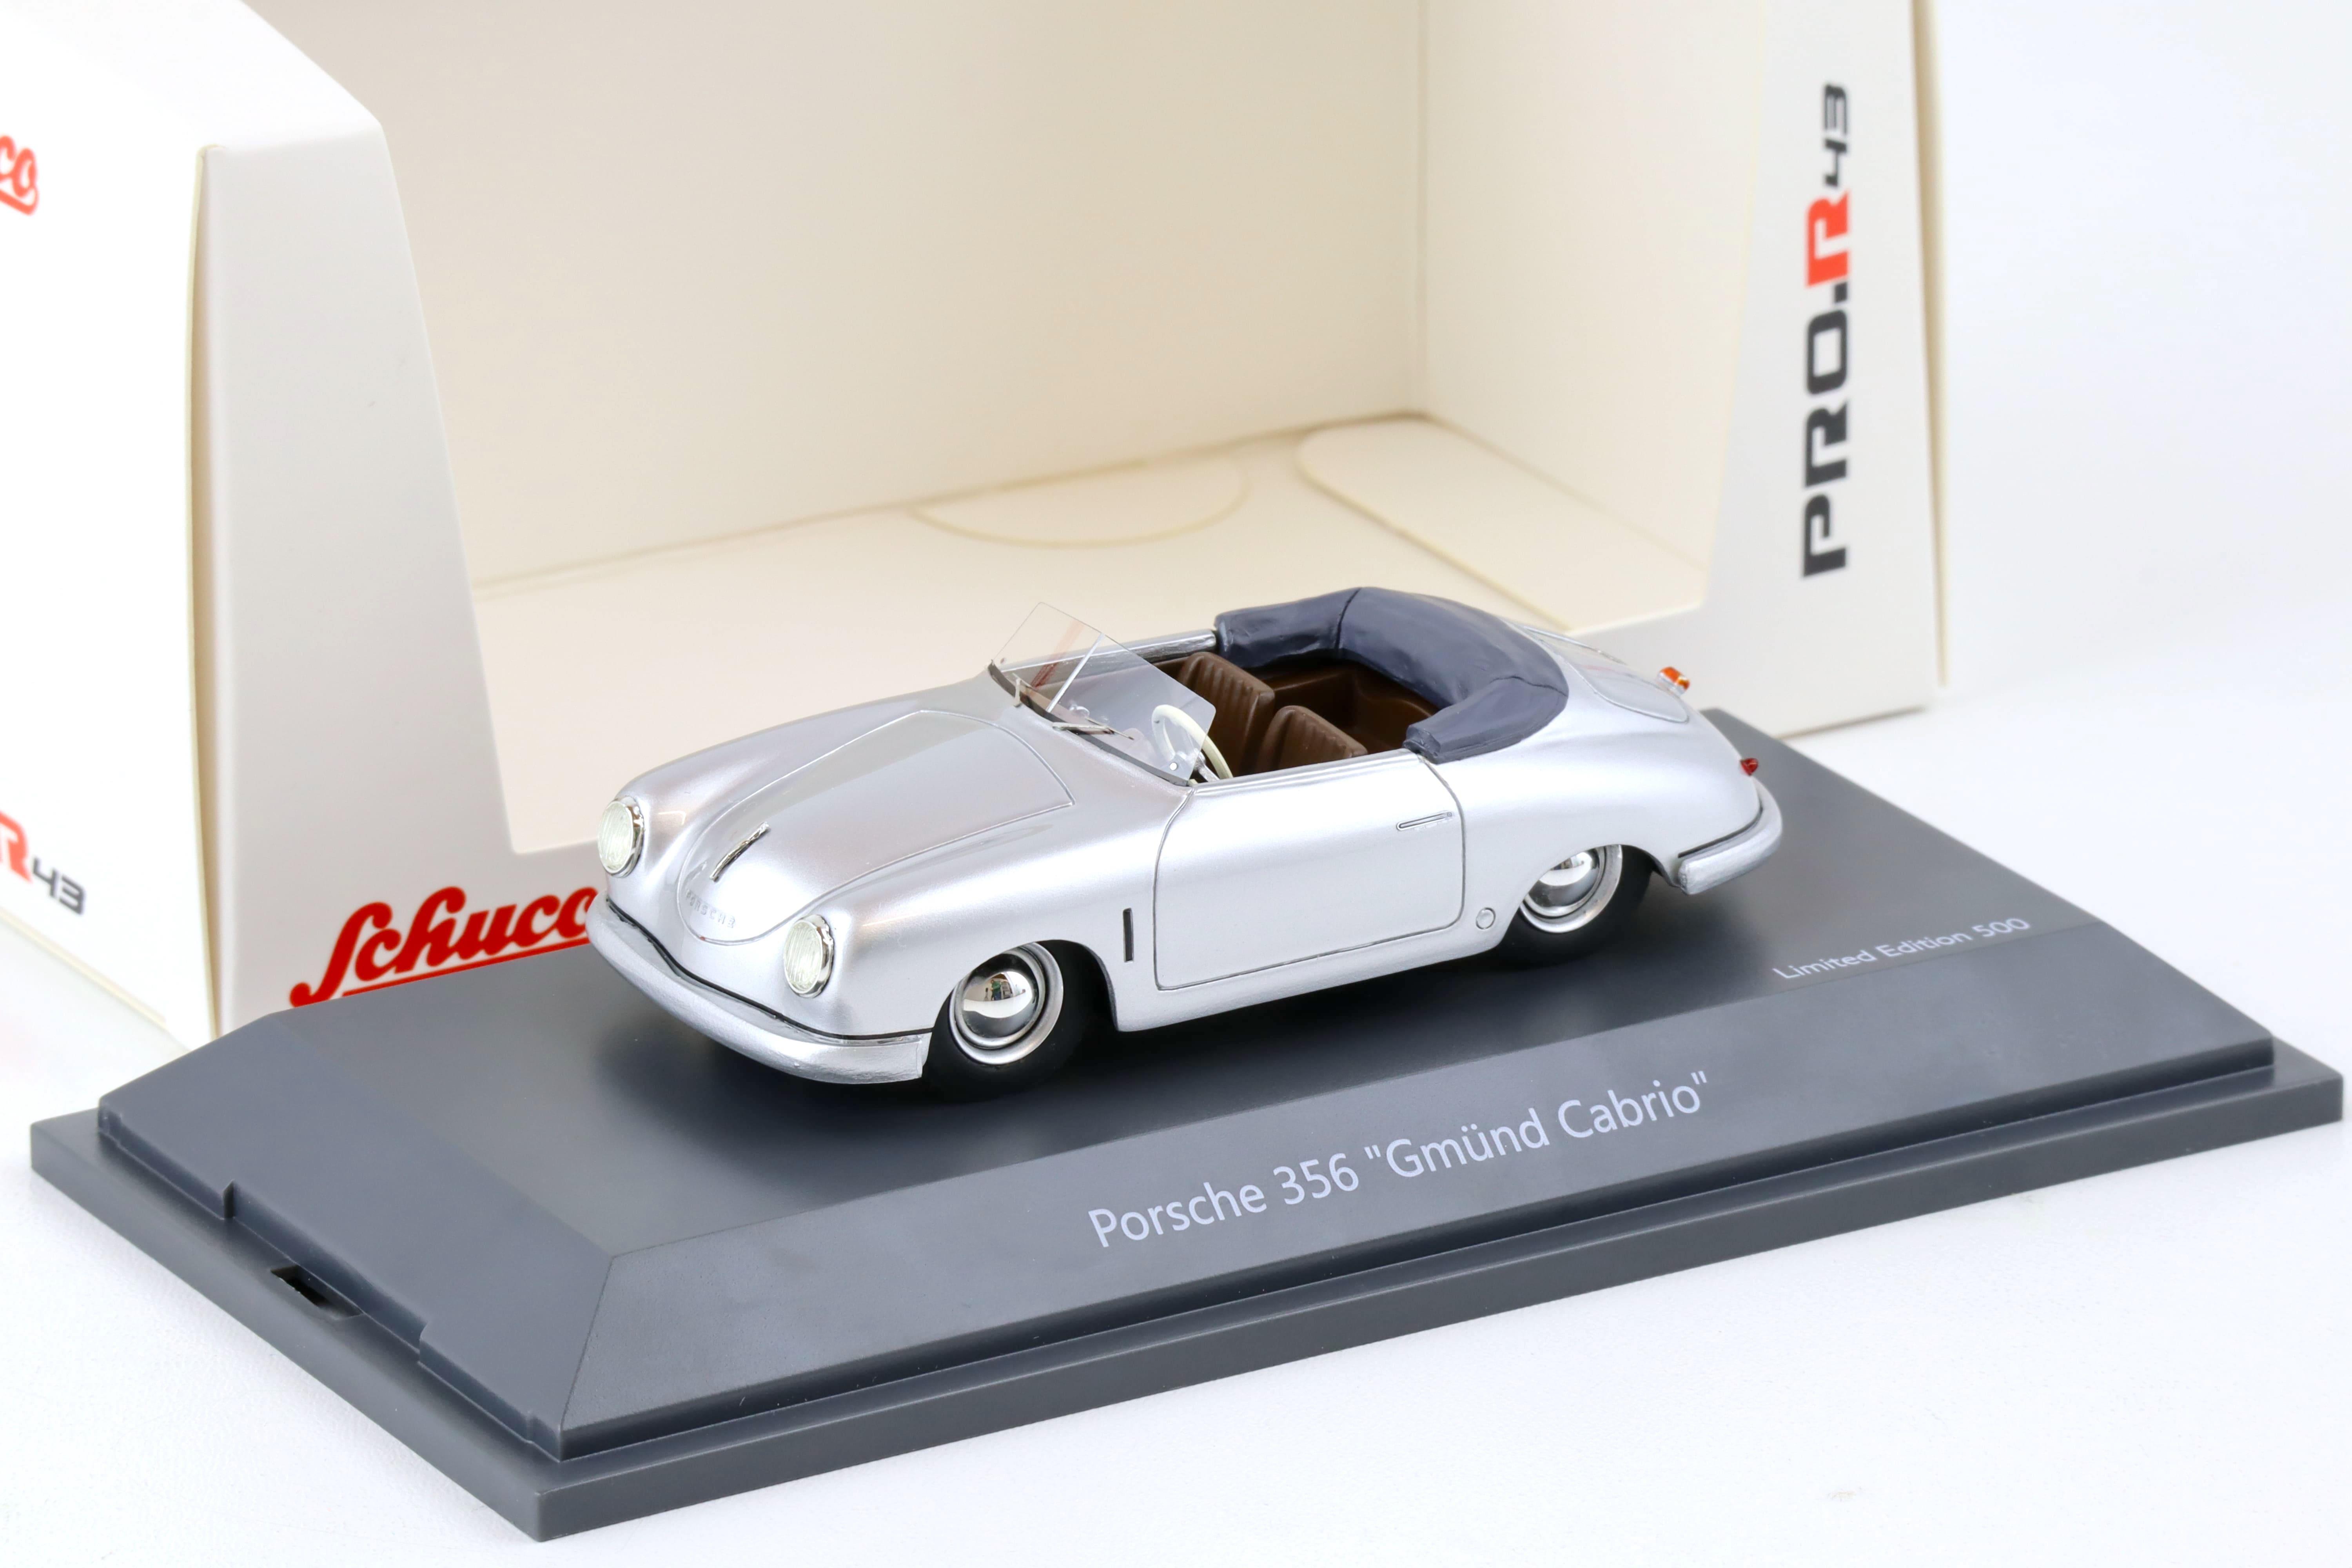 1:43 Schuco PRO.R43 Porsche 356 Gmünd Cabrio silver 450913100